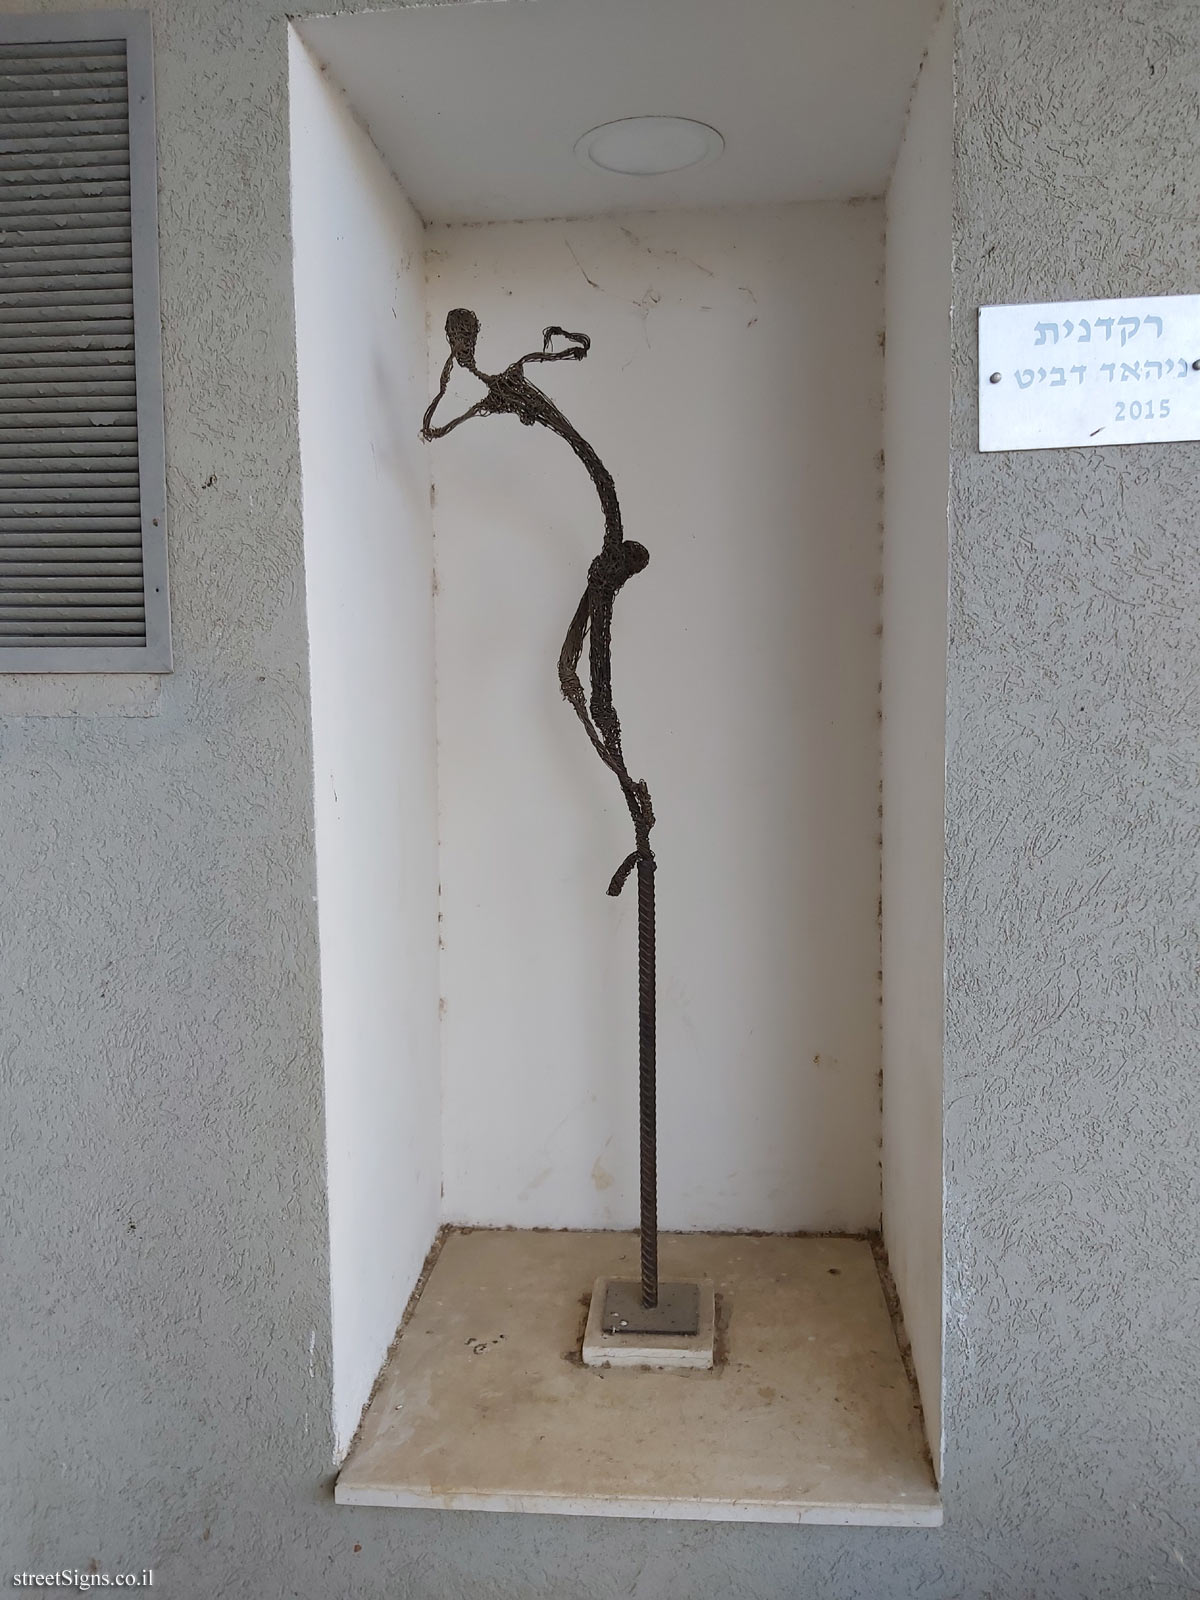 Yavneh - "Dancer" Outdoor sculpture by Nihad Debit - Du’ani Blvd/Kdoshe Ca’ir, Yavne, Israel